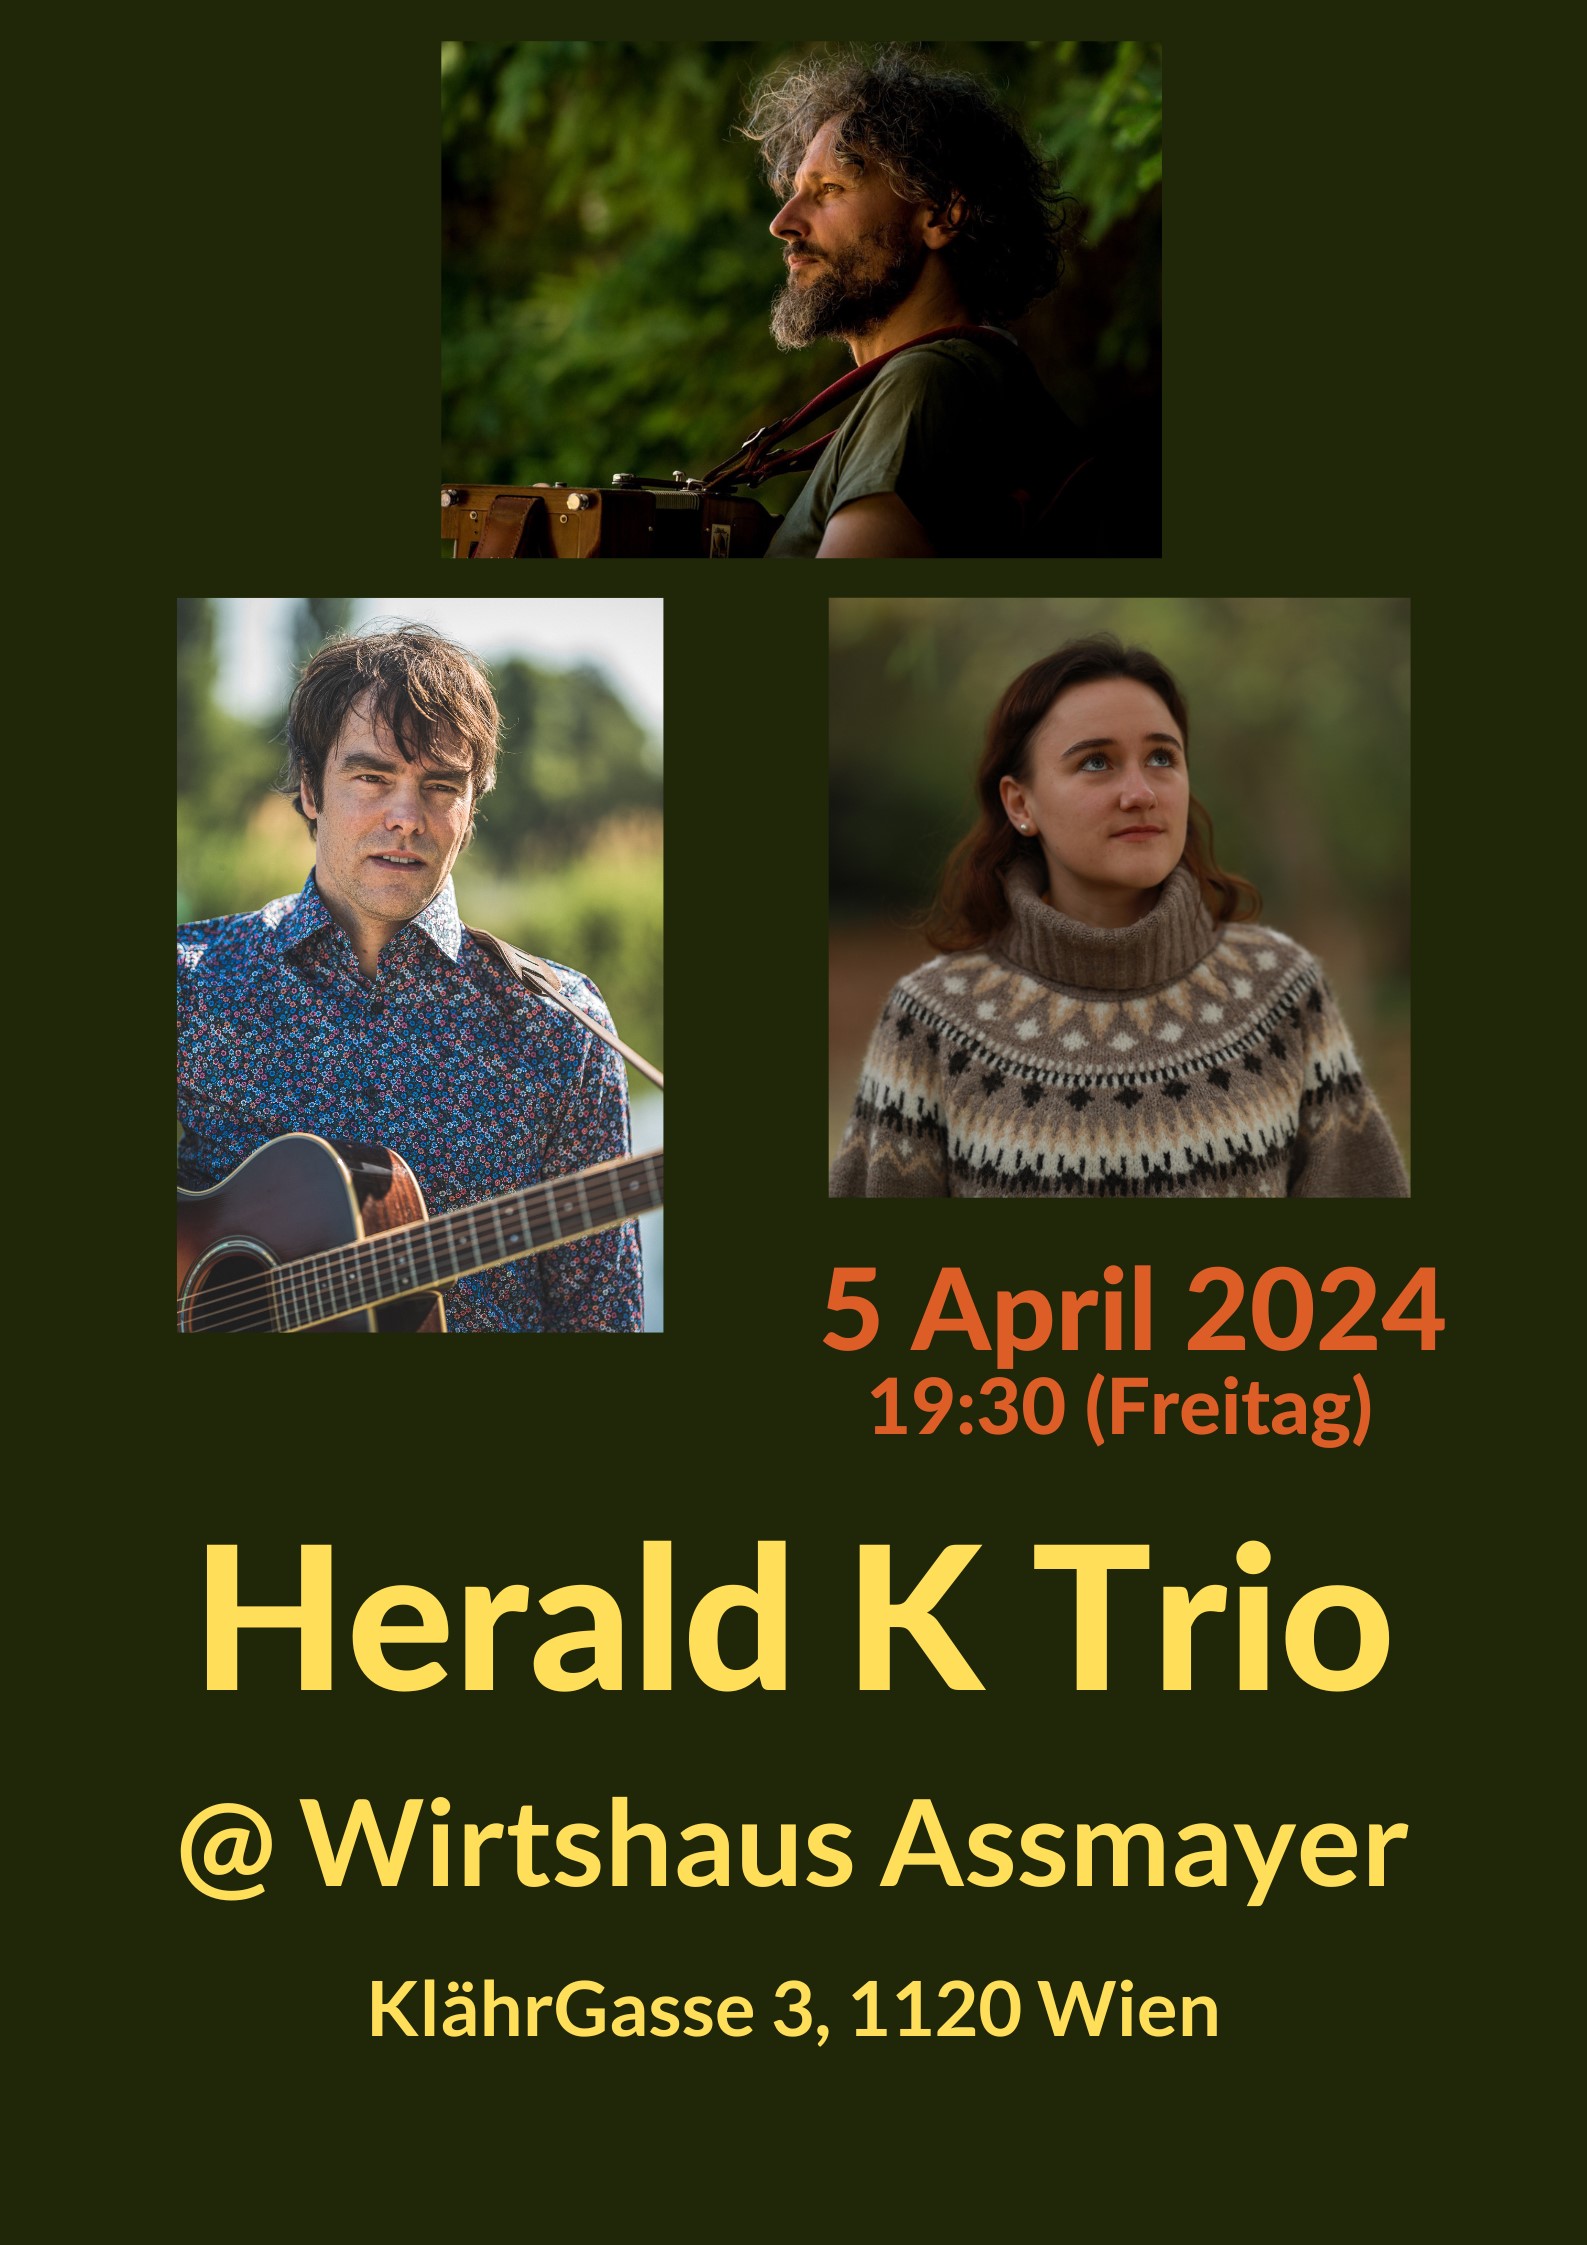 Herald K Trio